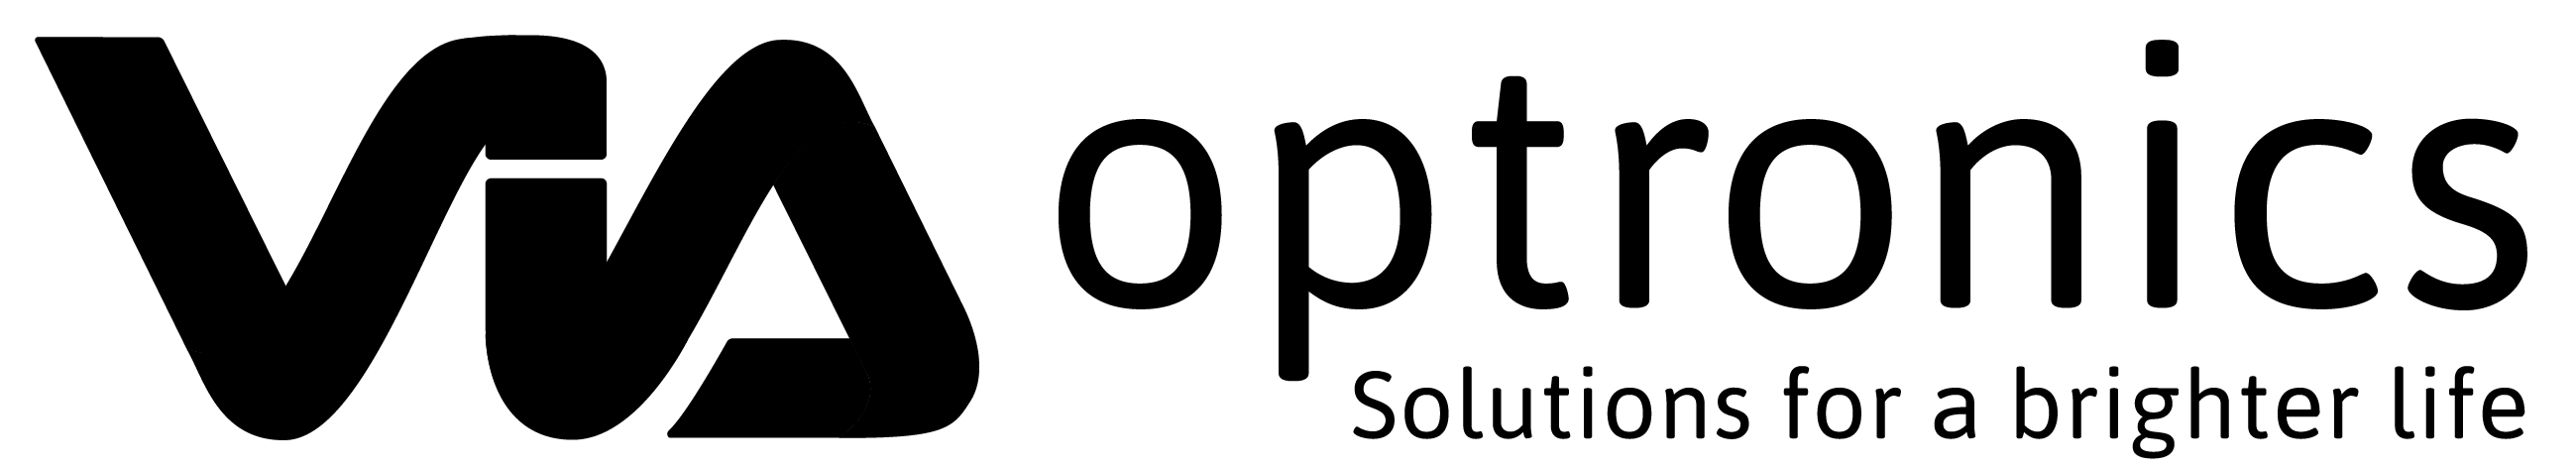 VIA optronics Logo schwarz